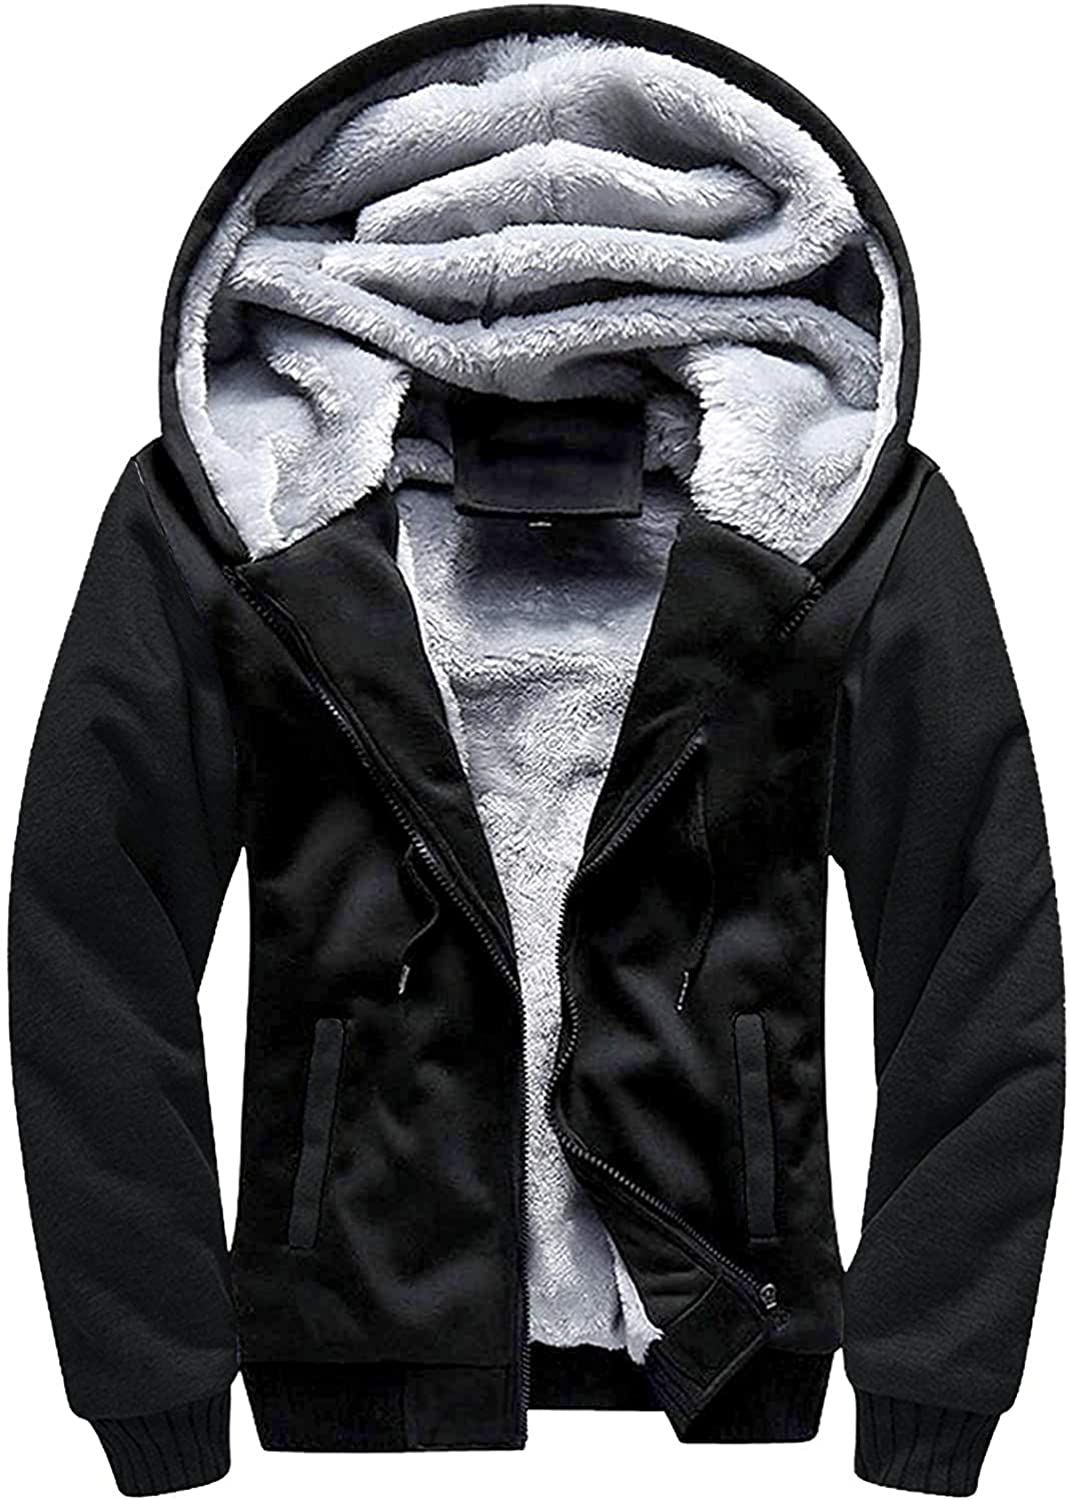 Full Zip Up Thick Sherpa Lined GEEK LIGHTING Hoodies for Men Heavyweight Fleece Sweatshirt